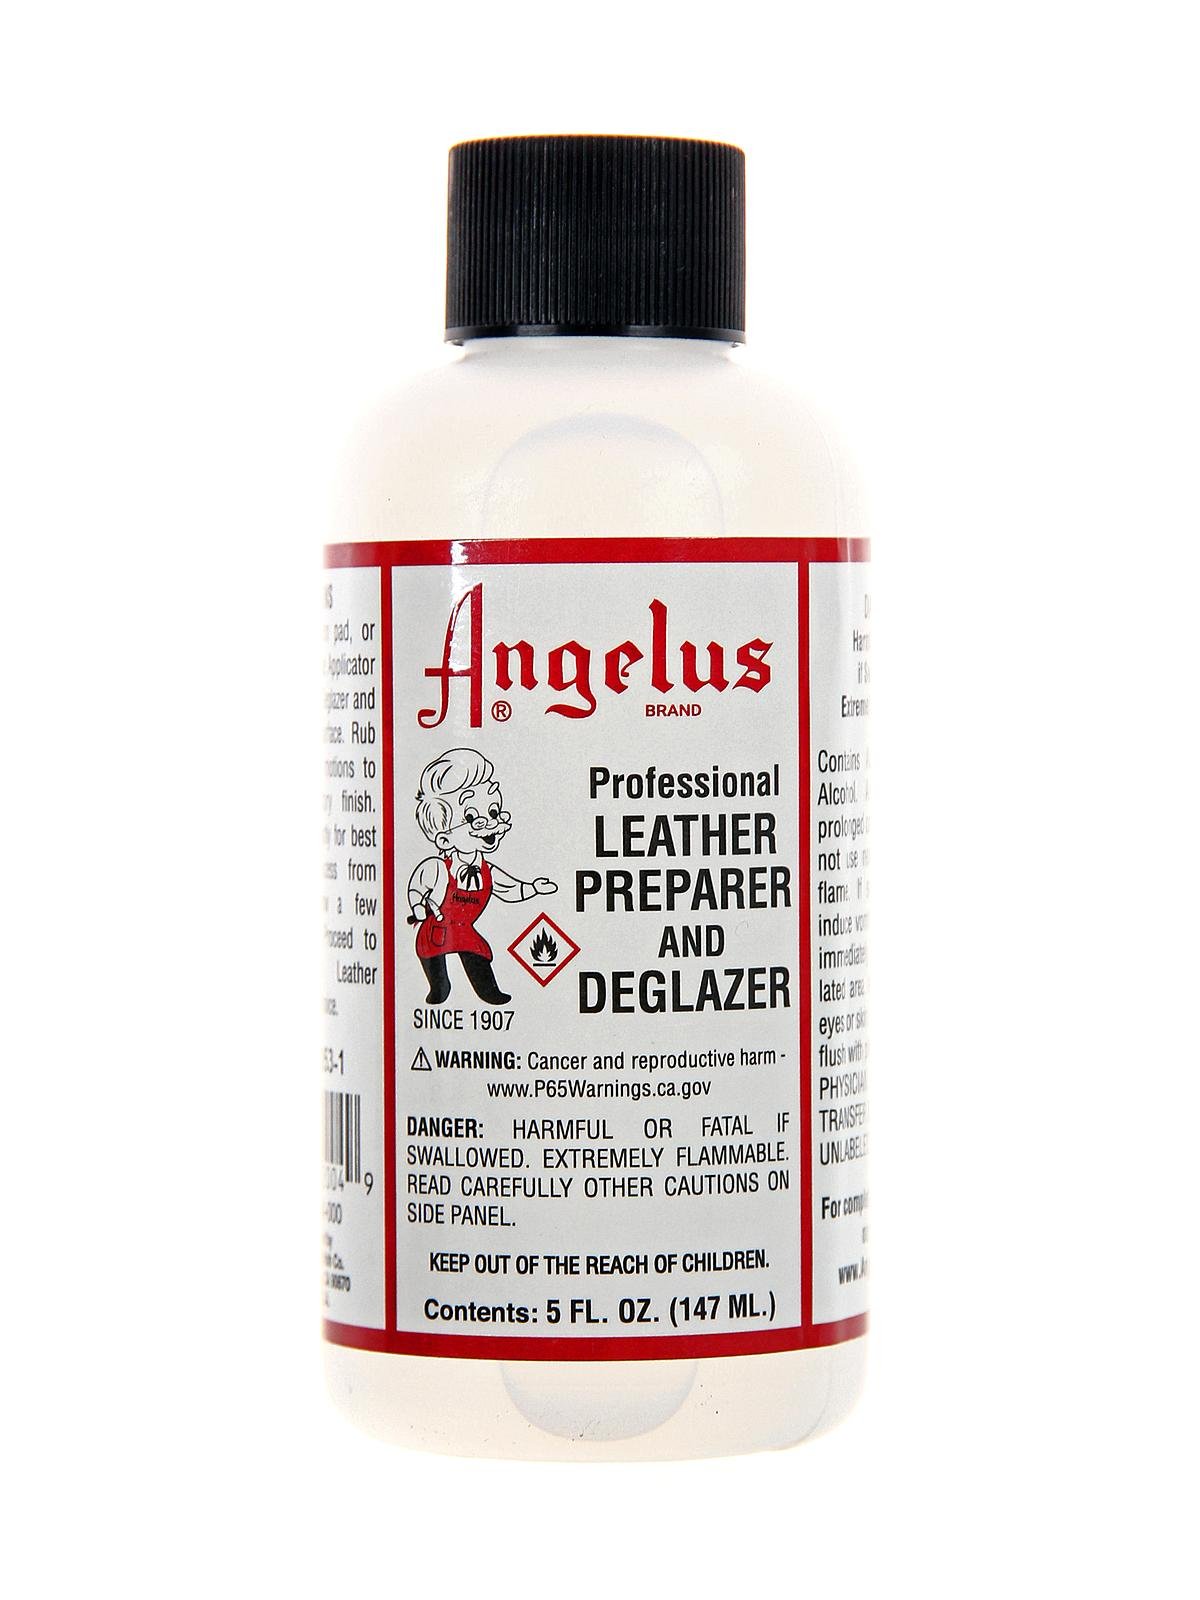 Angelus Professional Leather Preparer & Deglazer 1oz Bottle Use